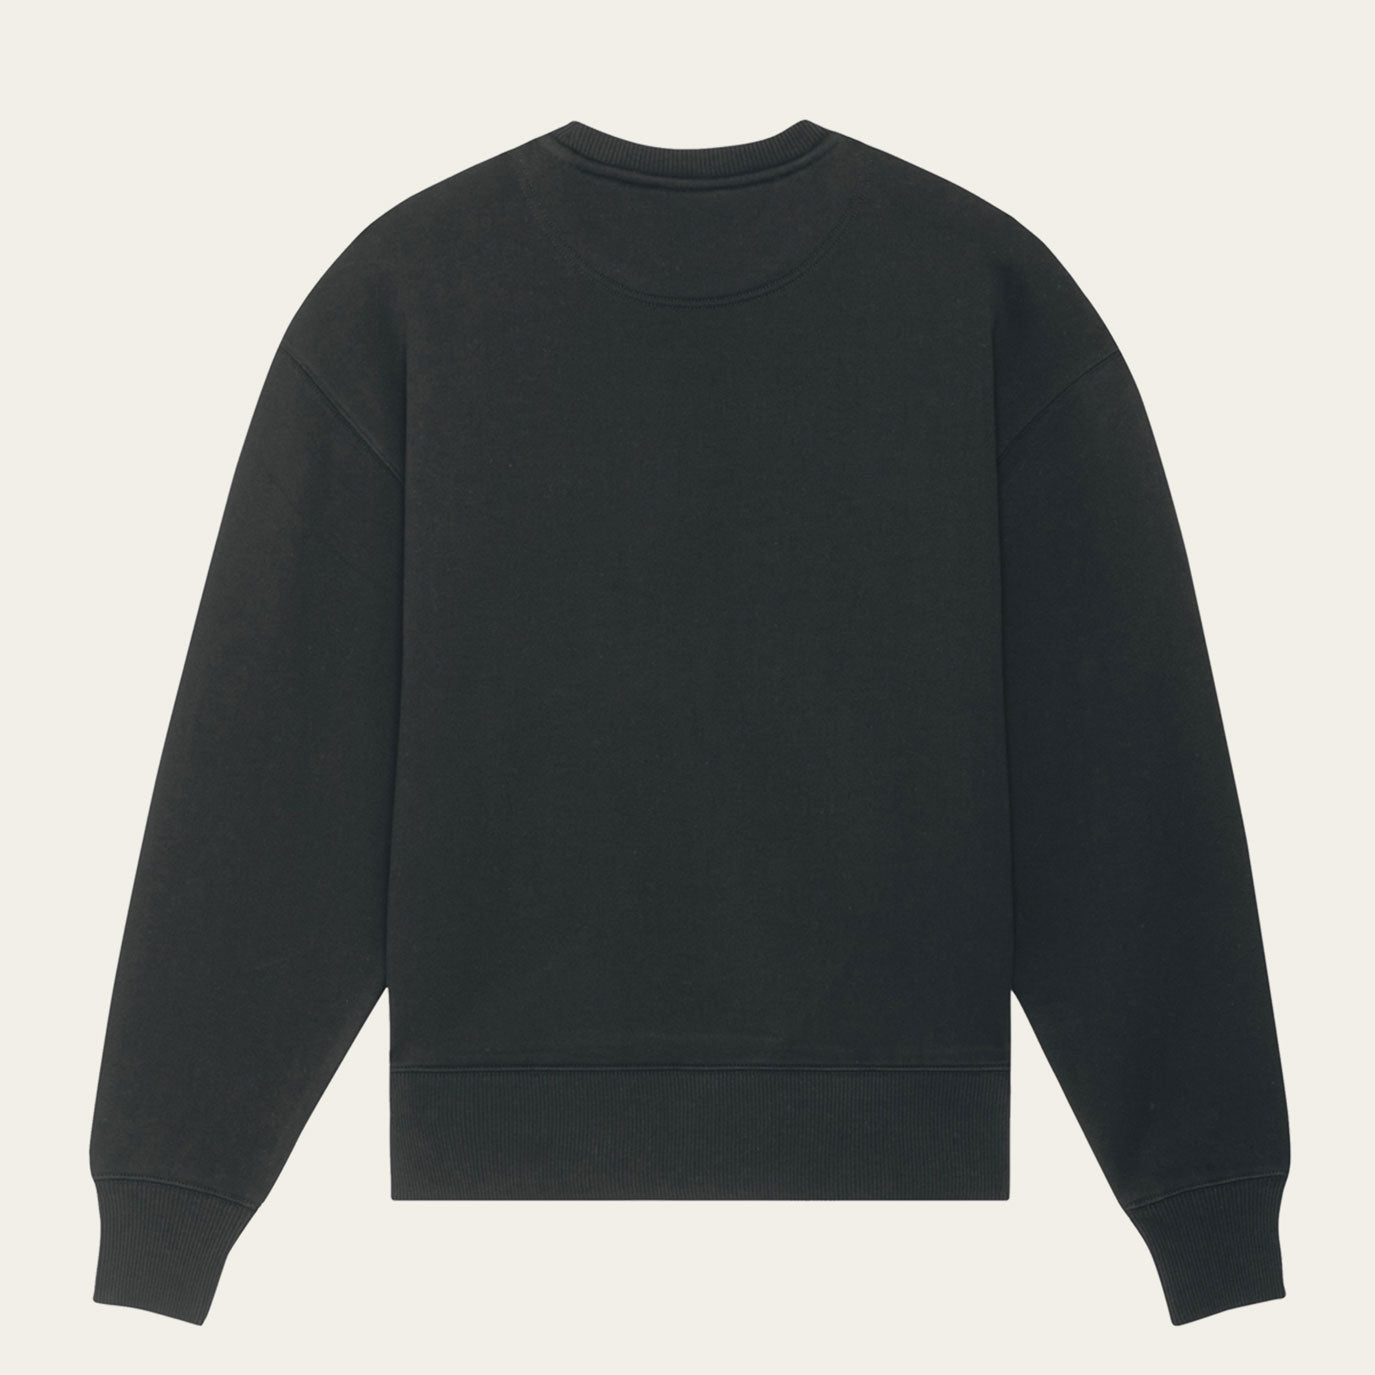 ROFFA. heavy sweater oversized - links - 100% organisch katoen